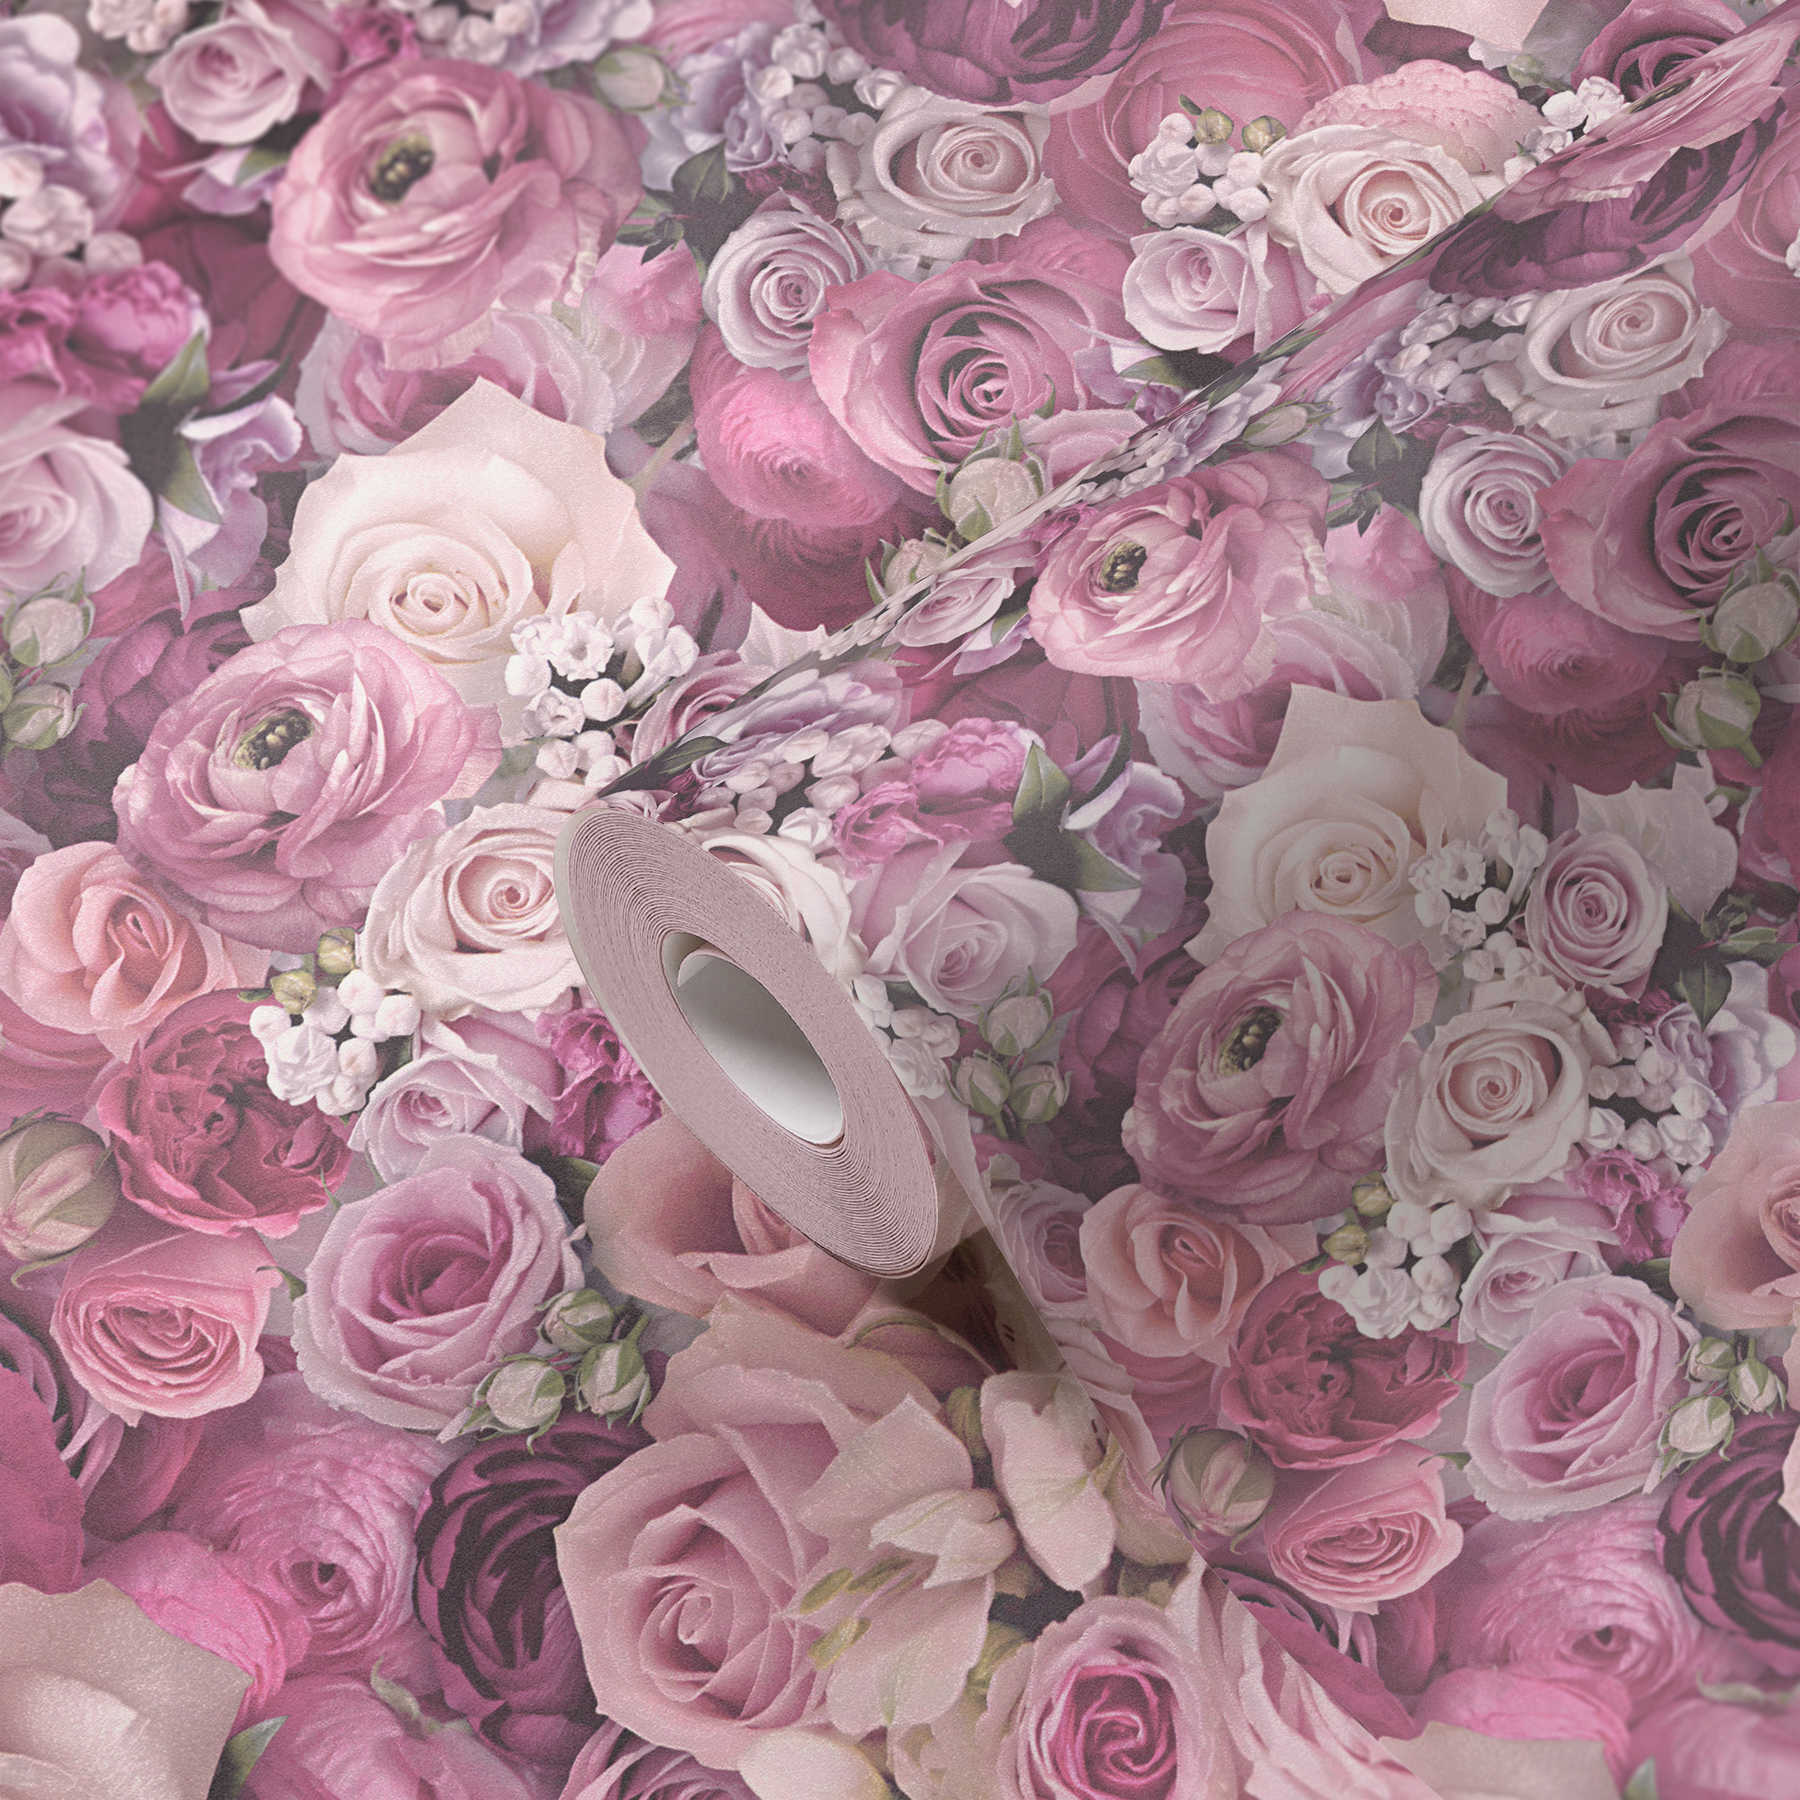             3D non-woven wallpaper roses flowers motif - purple
        